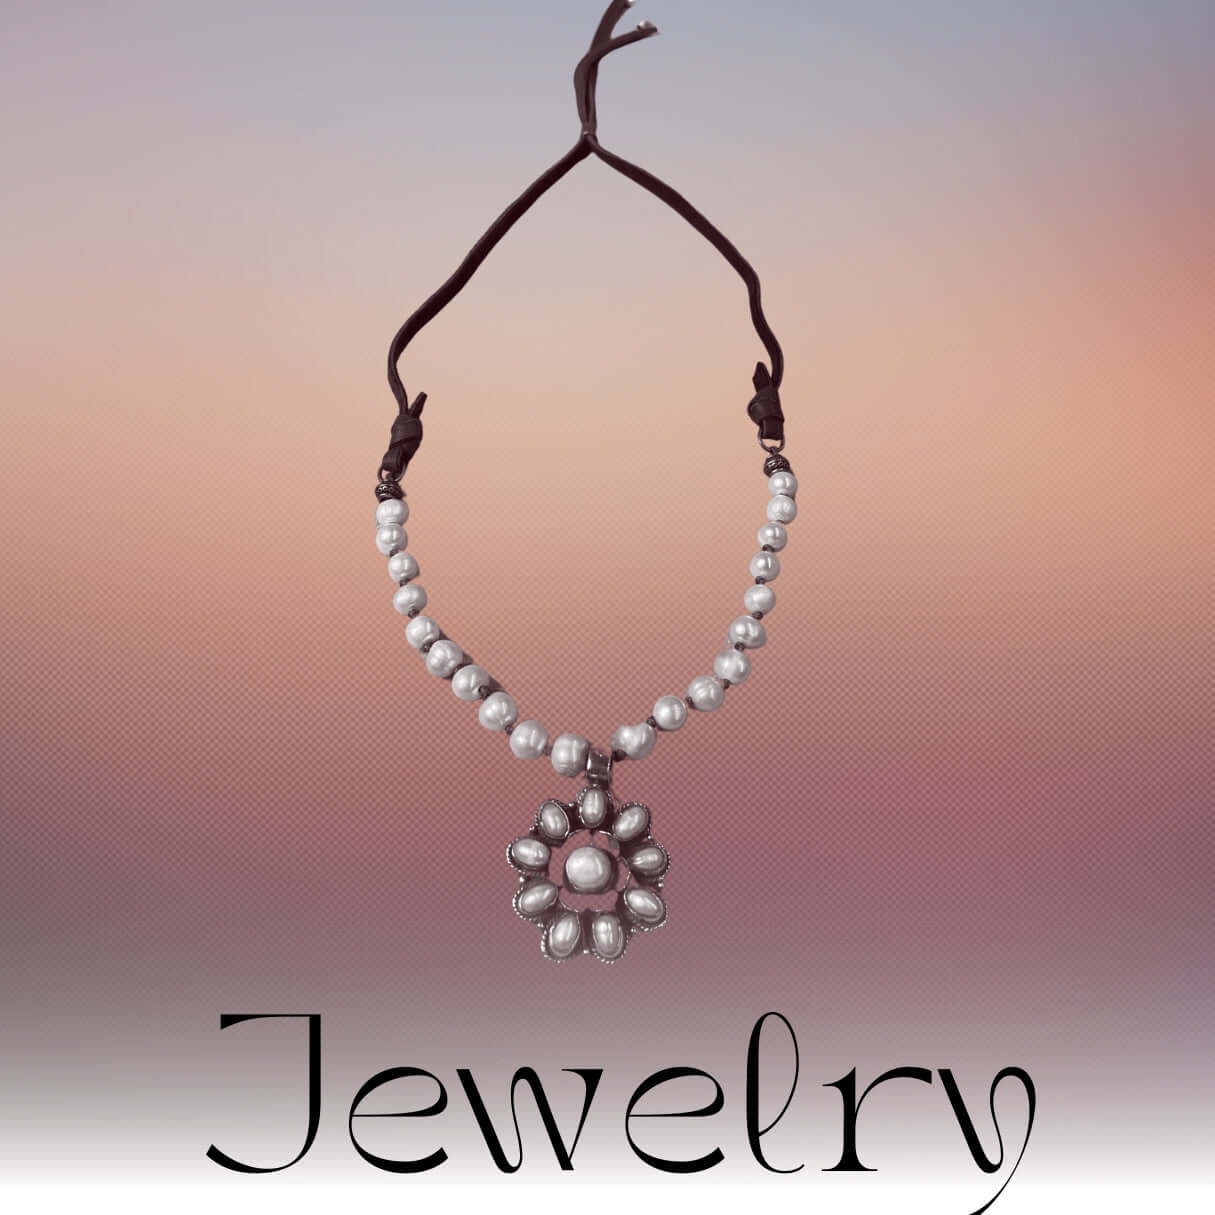 Jewelry: Women's Jewelry & Accessories Made in USA